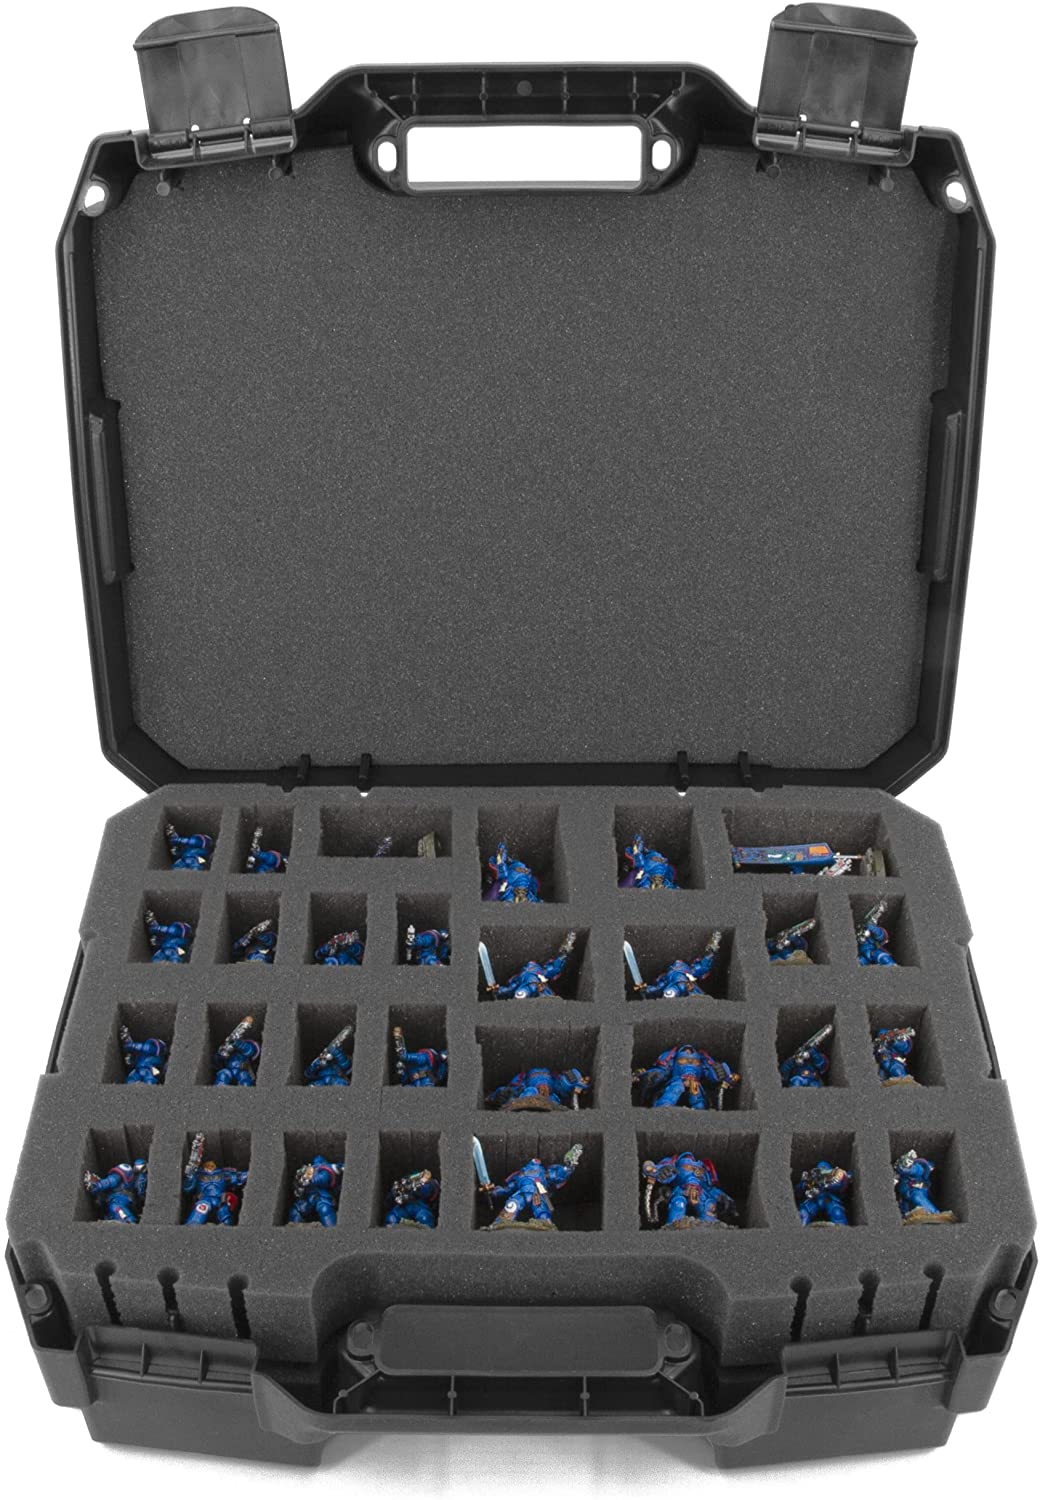 CASEMATIX Miniature Storage Hard Shell Figure Case - Dual Layer Foam  Miniature Case for Miniatures, Compatible with Warhammer 40k, DND & More!